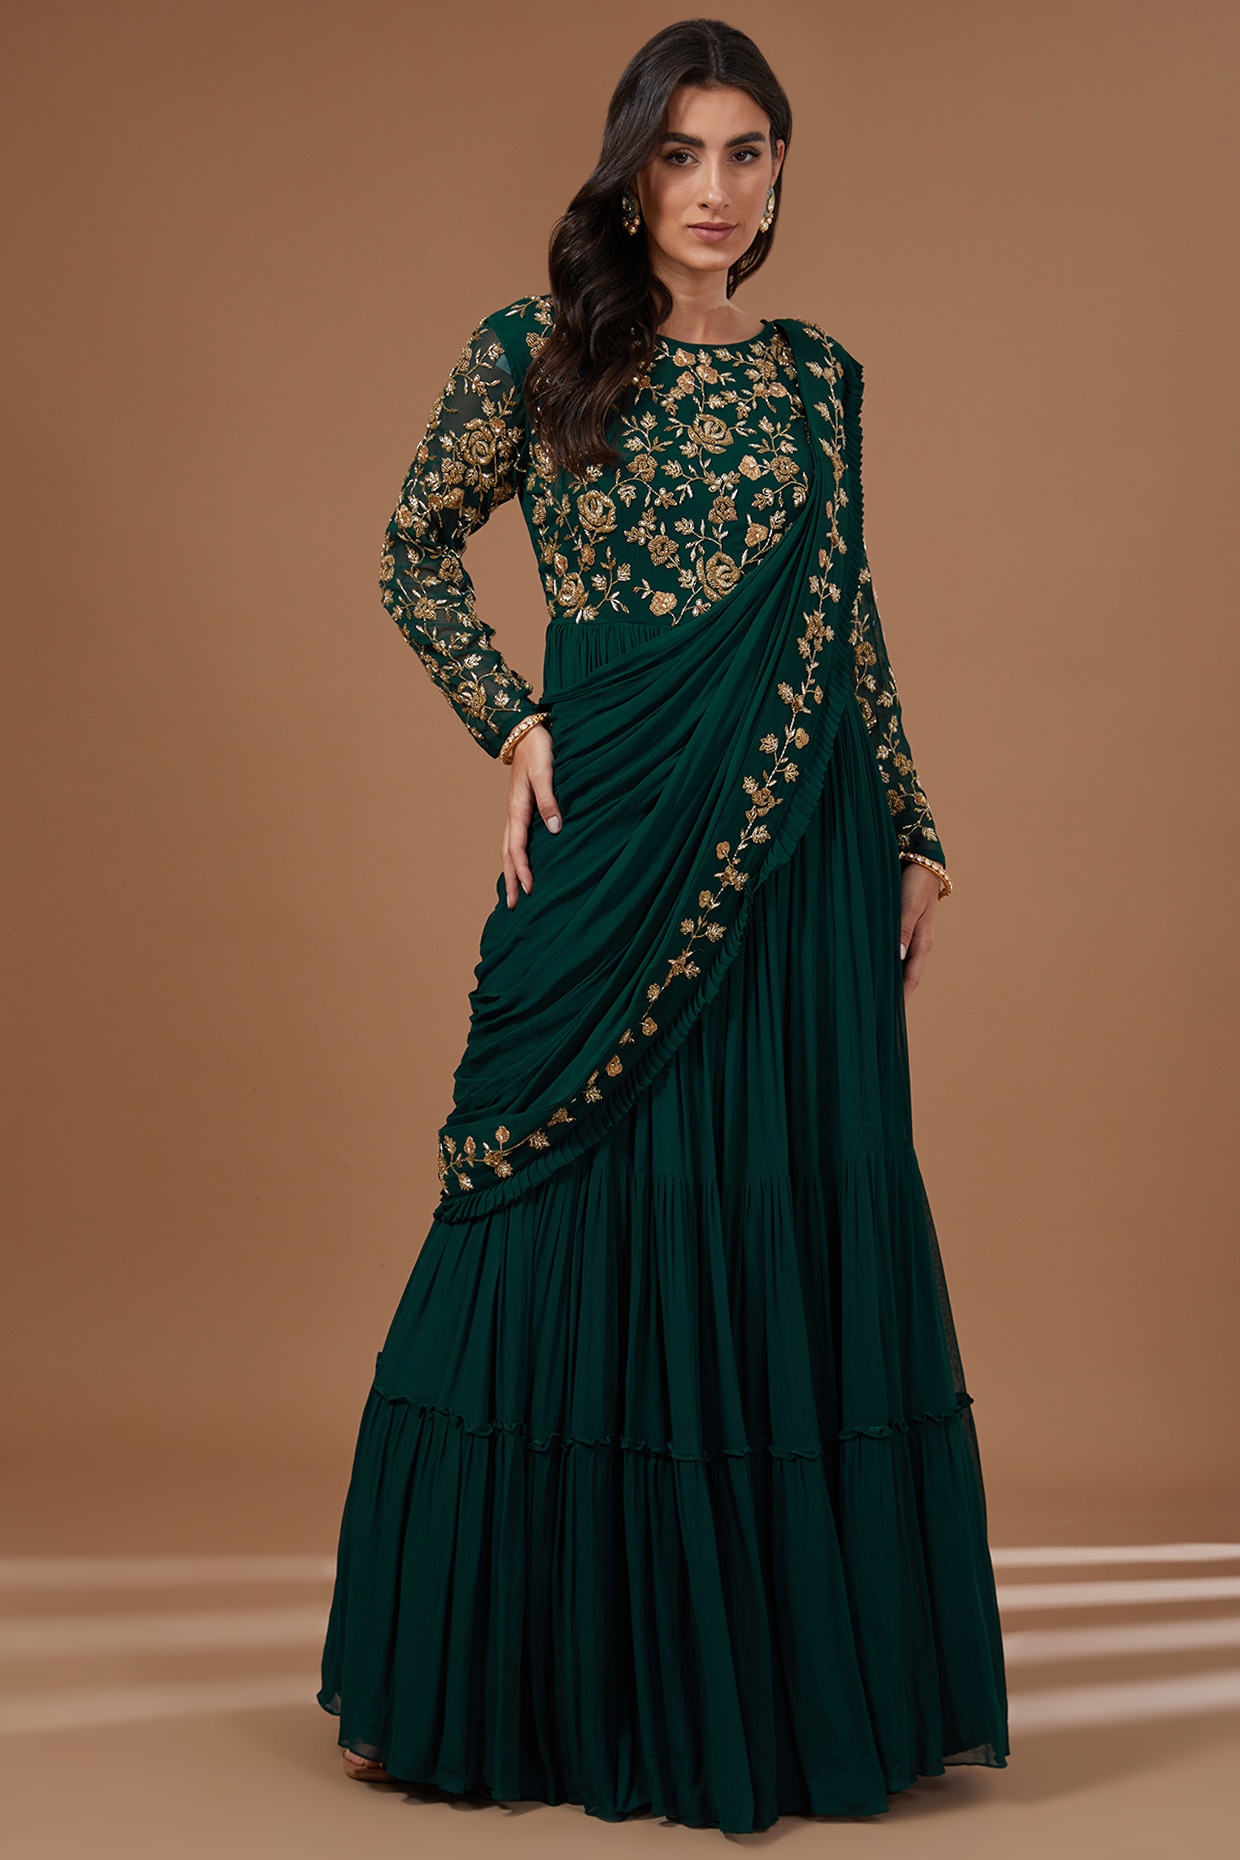 Christian Bridal Saree with Elegant Design